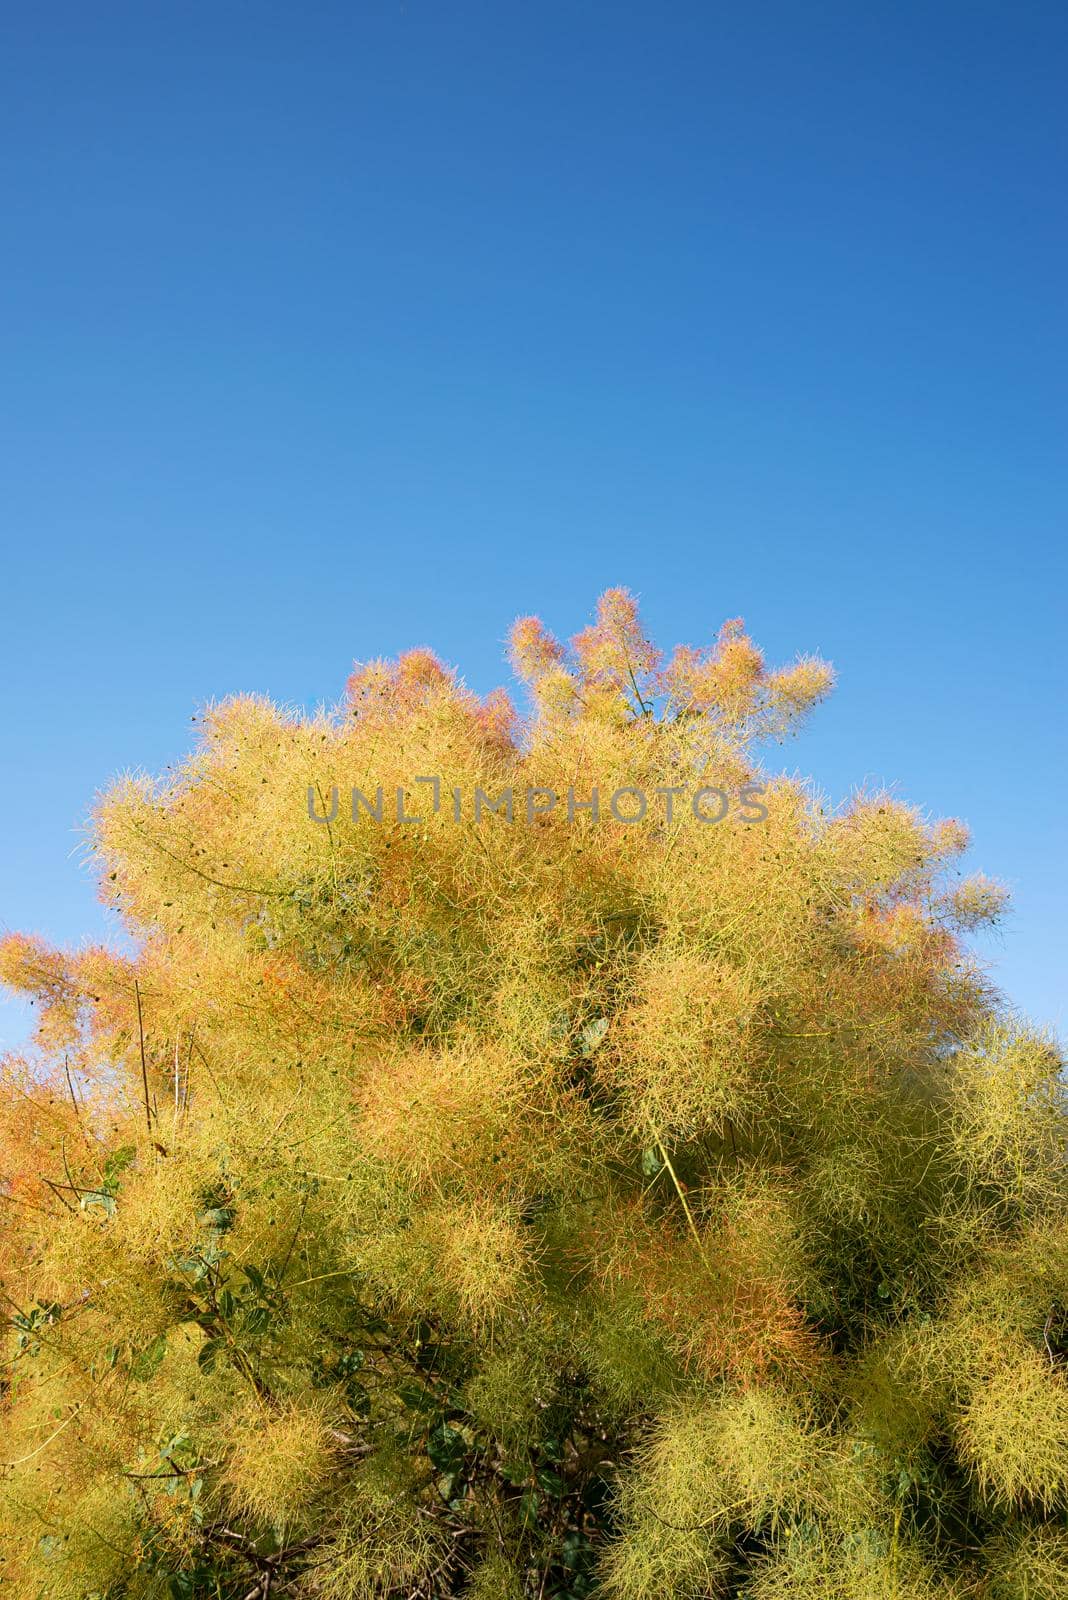 Cotinus coggygria also known as European smoketree, Eurasian smoketree, smoke tree, smoke bush, Venetian sumach, or dyer's sumach